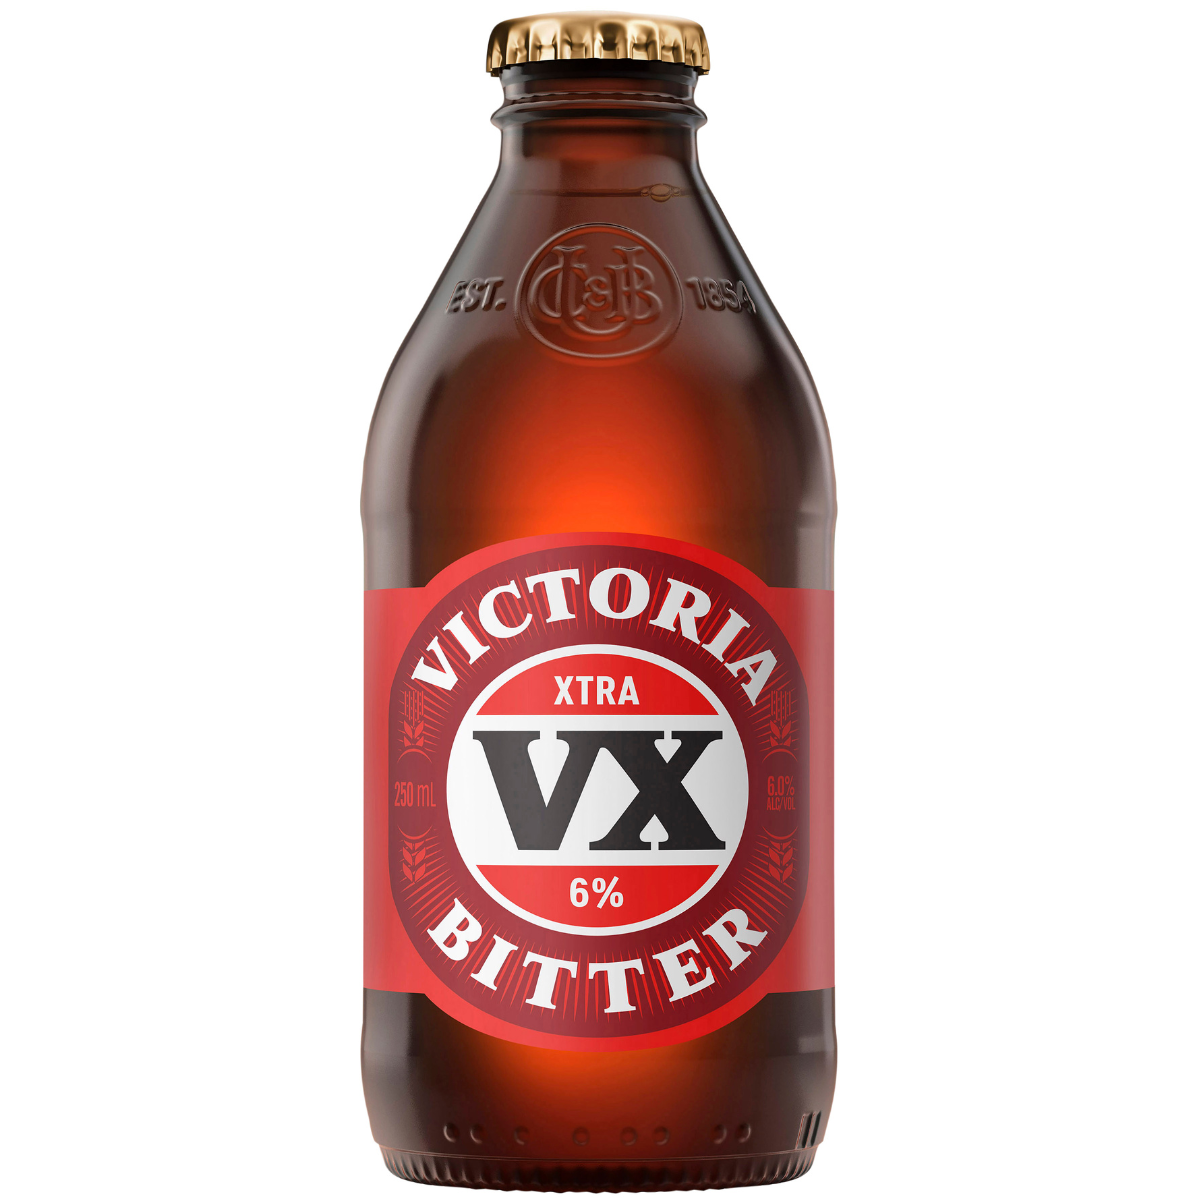 Victoria Bitter Xtra VX Bottle 250ml